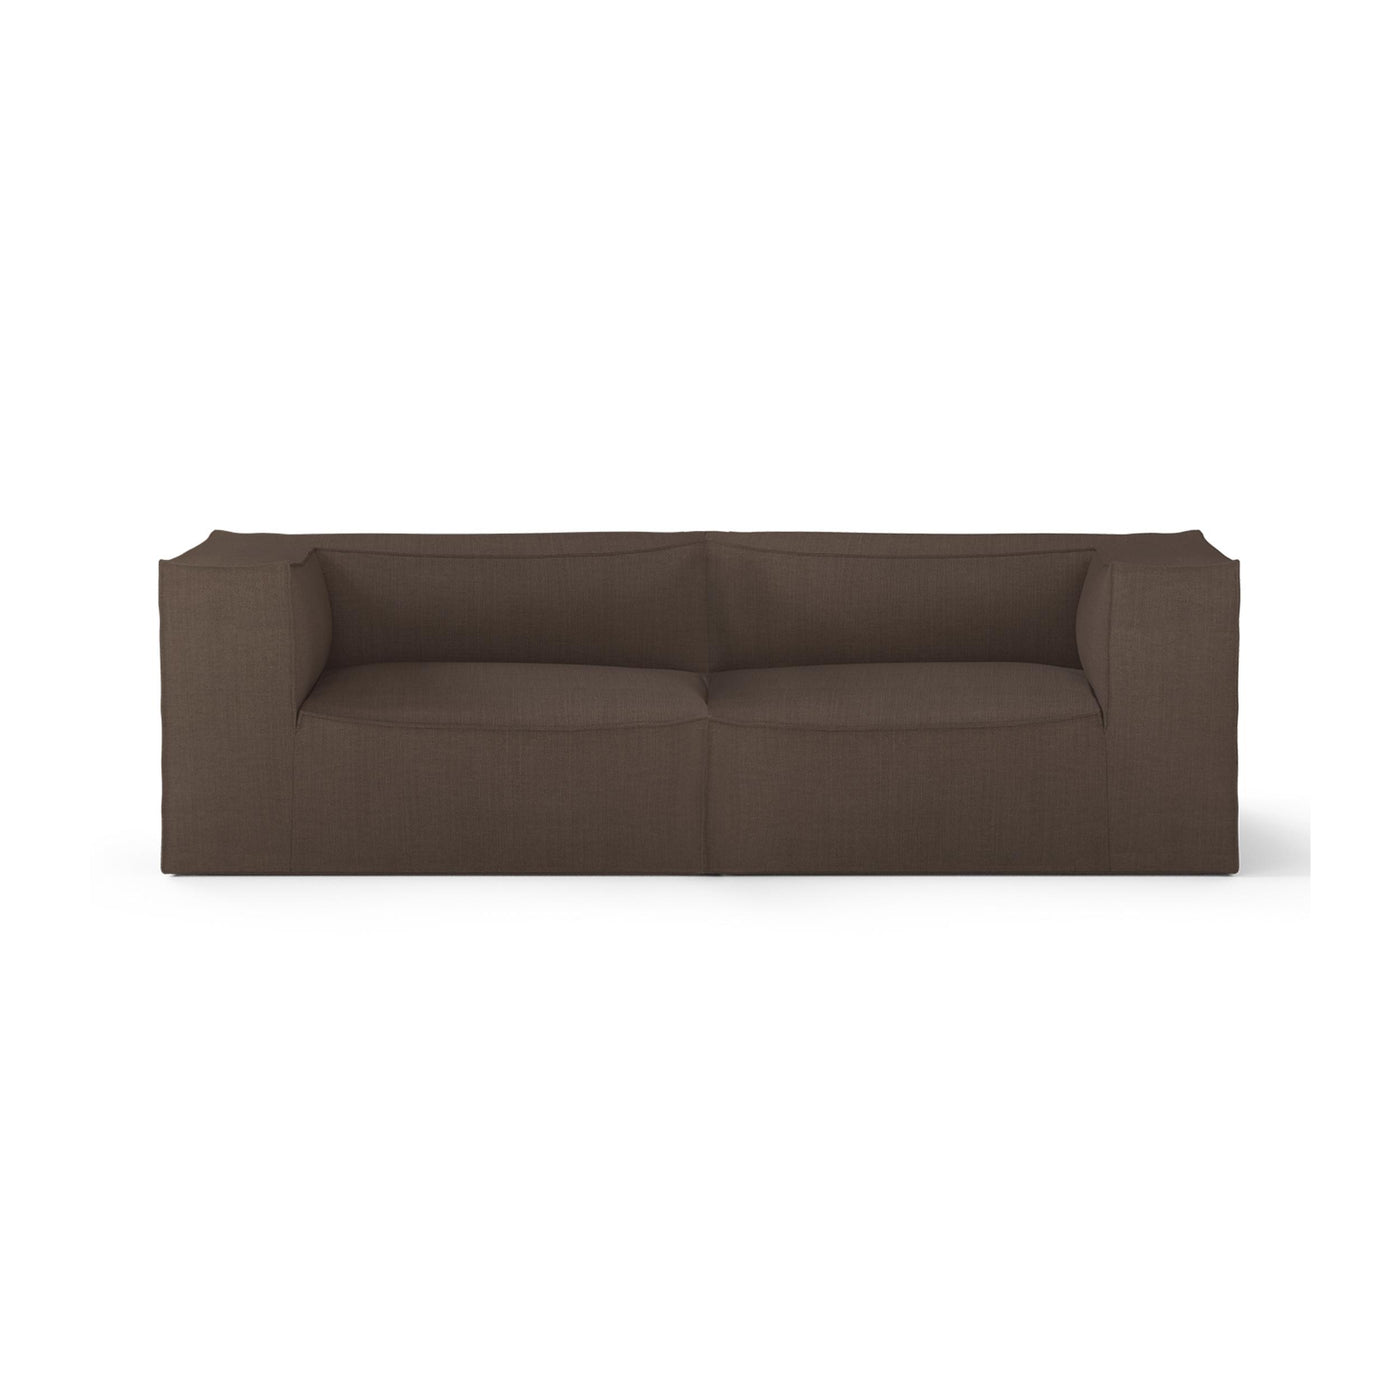 Ferm LIVING Catena Modular 2 Seater sofa. Made to order at someday designs #colour_linara-chocolate